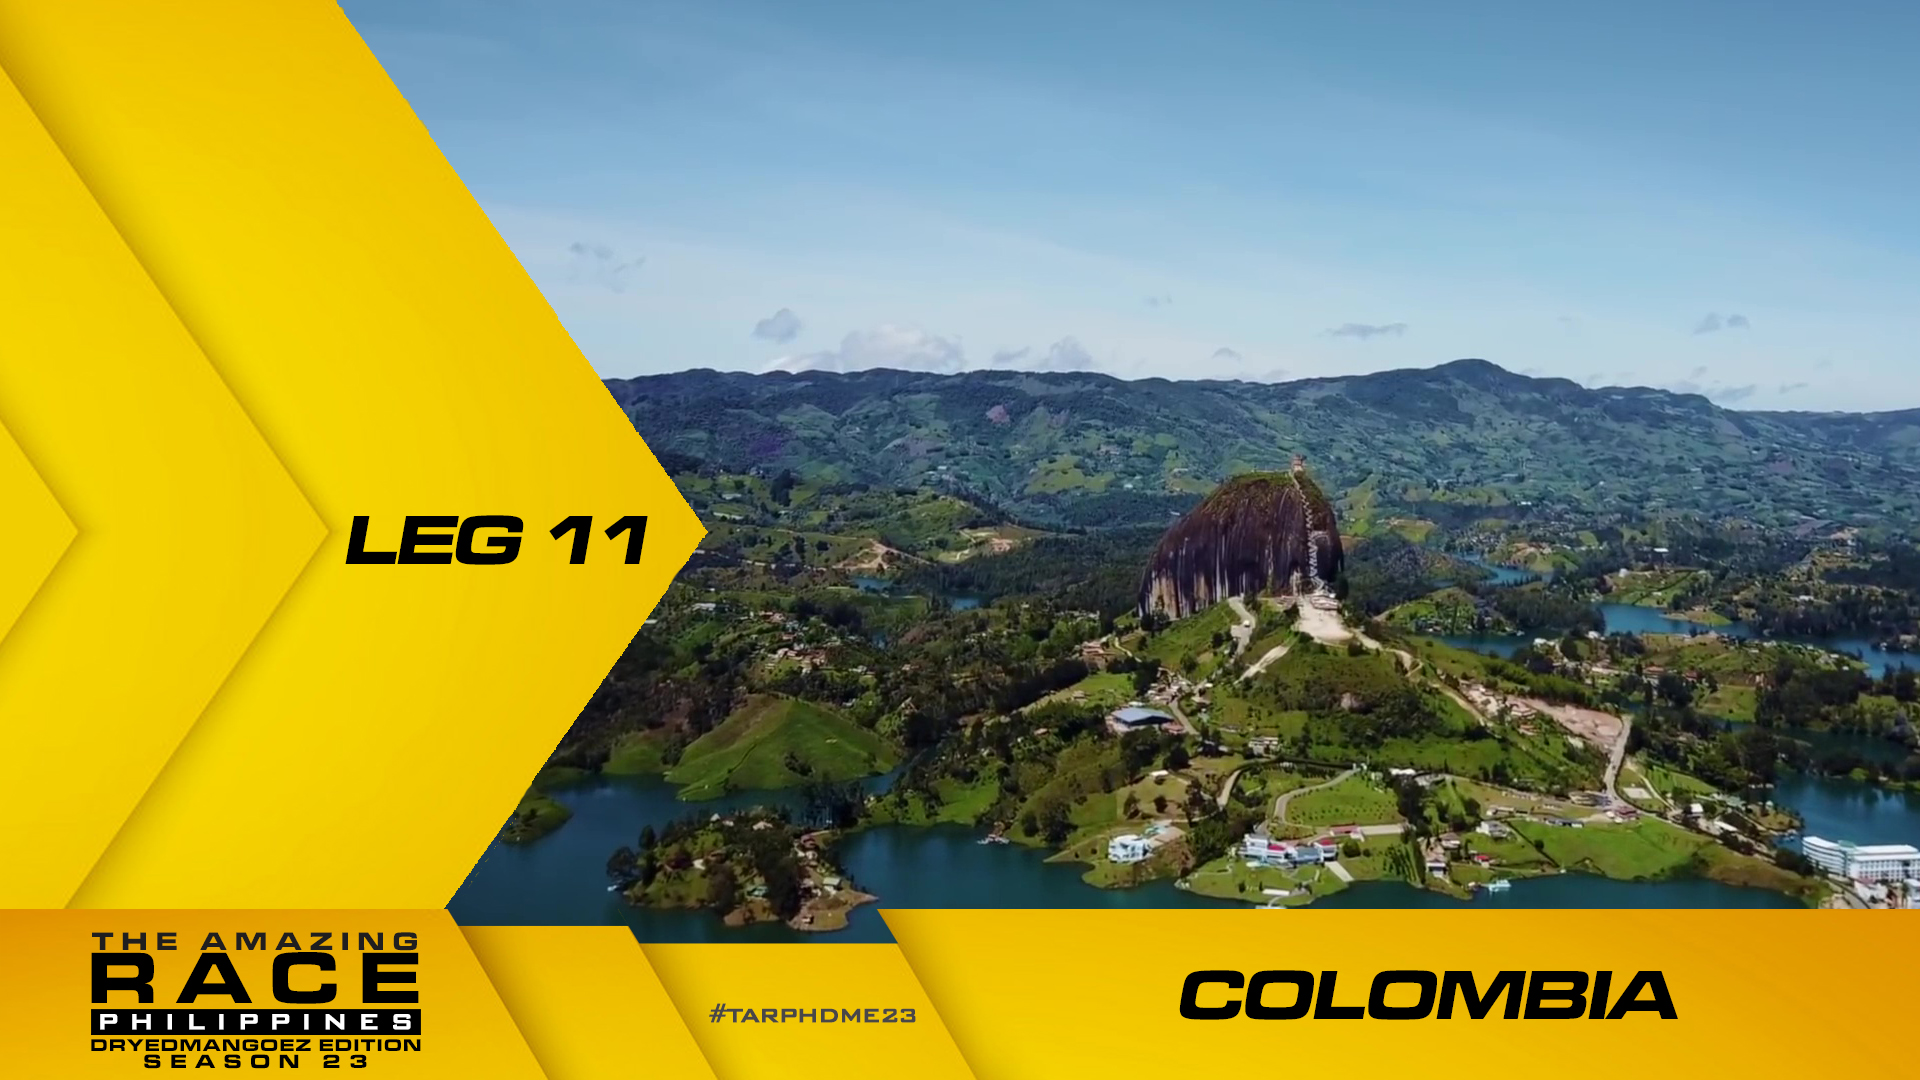 The Amazing Race Philippines: DryedMangoez Edition 23, Leg 11 – Colombia